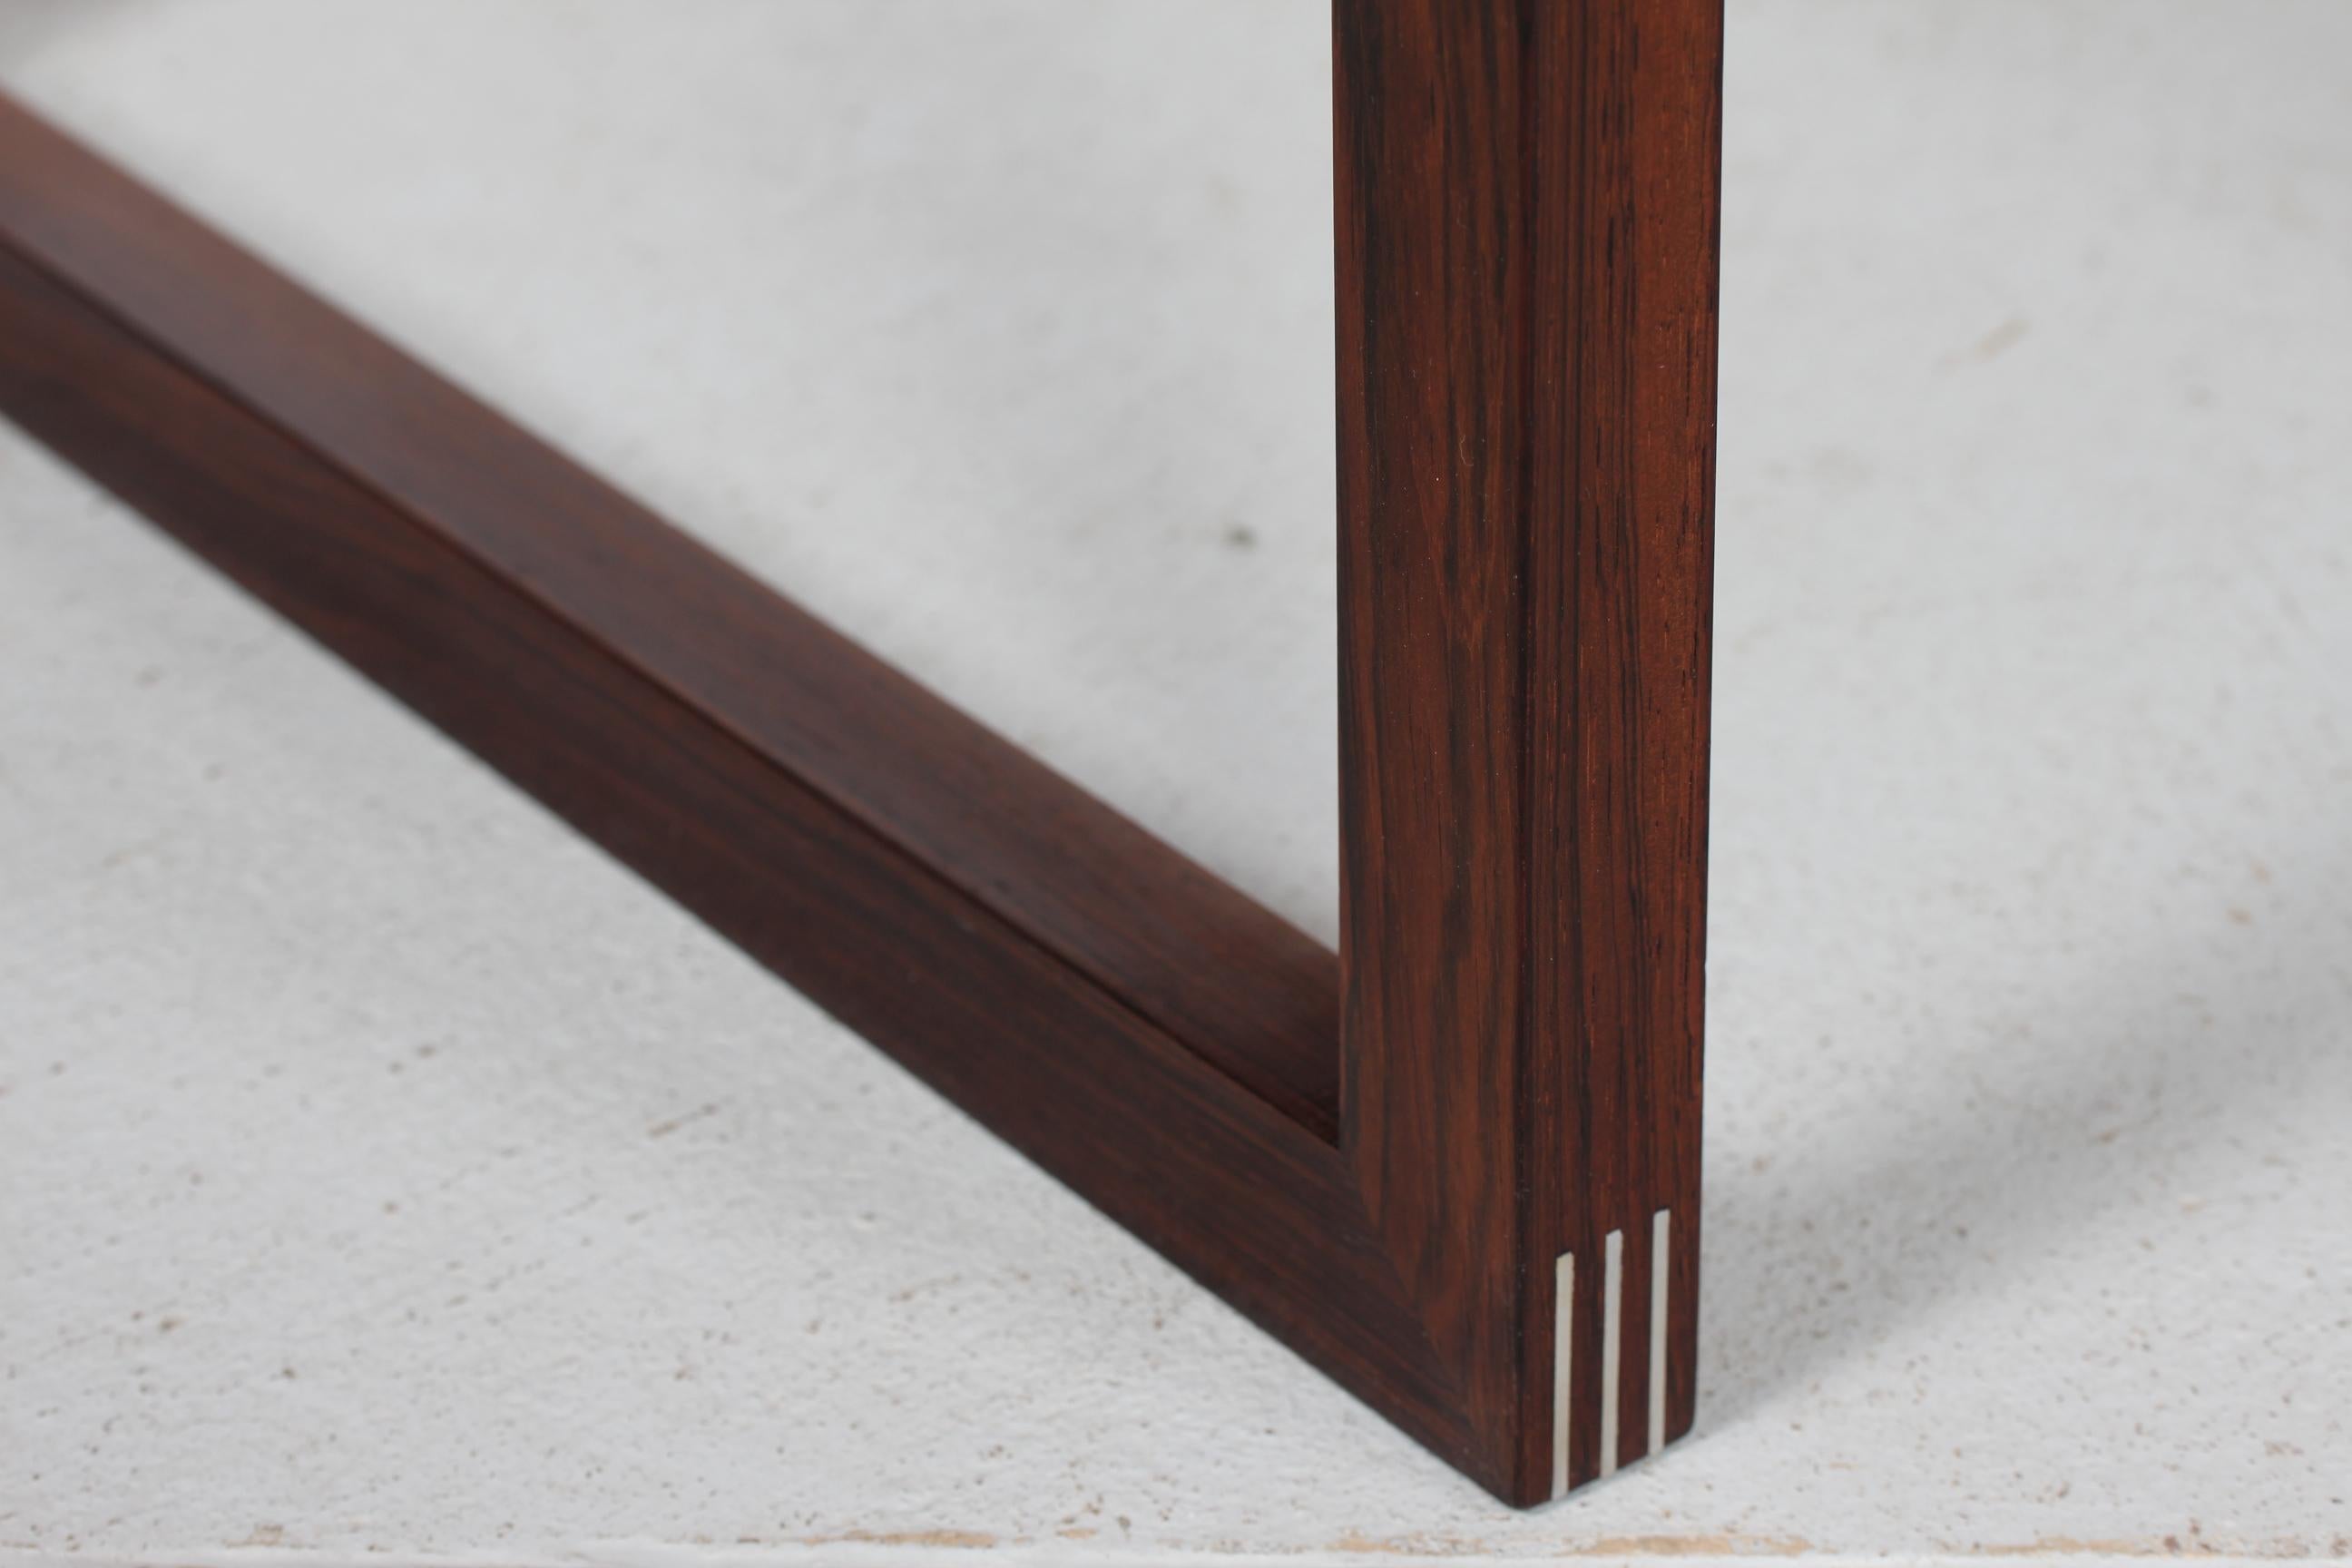 Inlay Danish Modern Rud Thygesen Sleigh Leg Coffee Table of Rosewood with Inlaid Metal